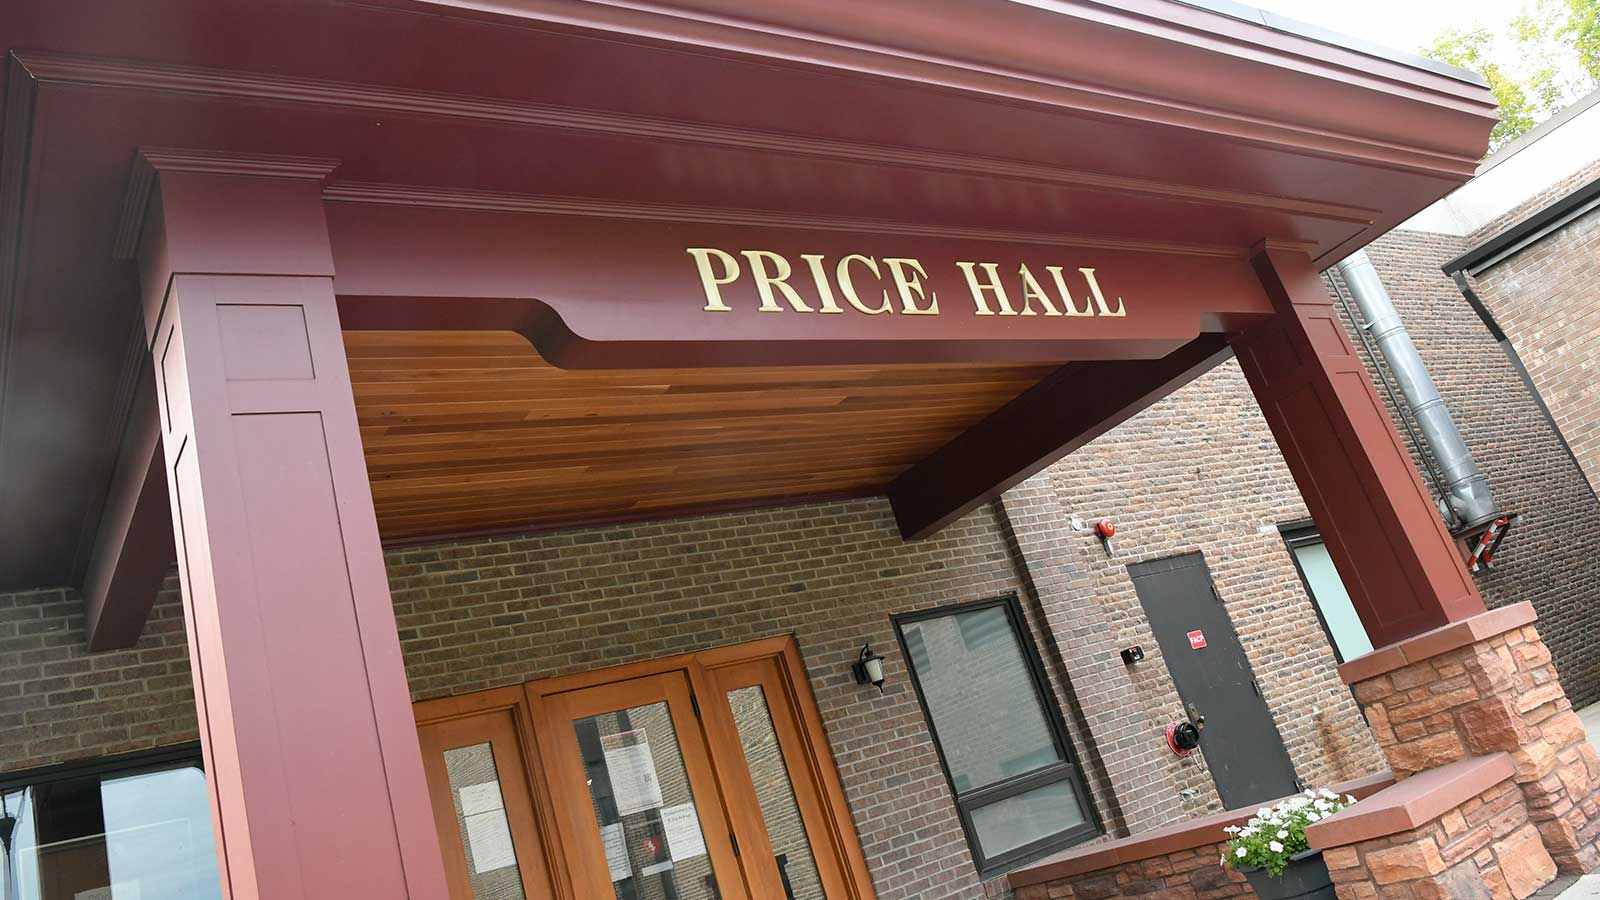 Price Hall